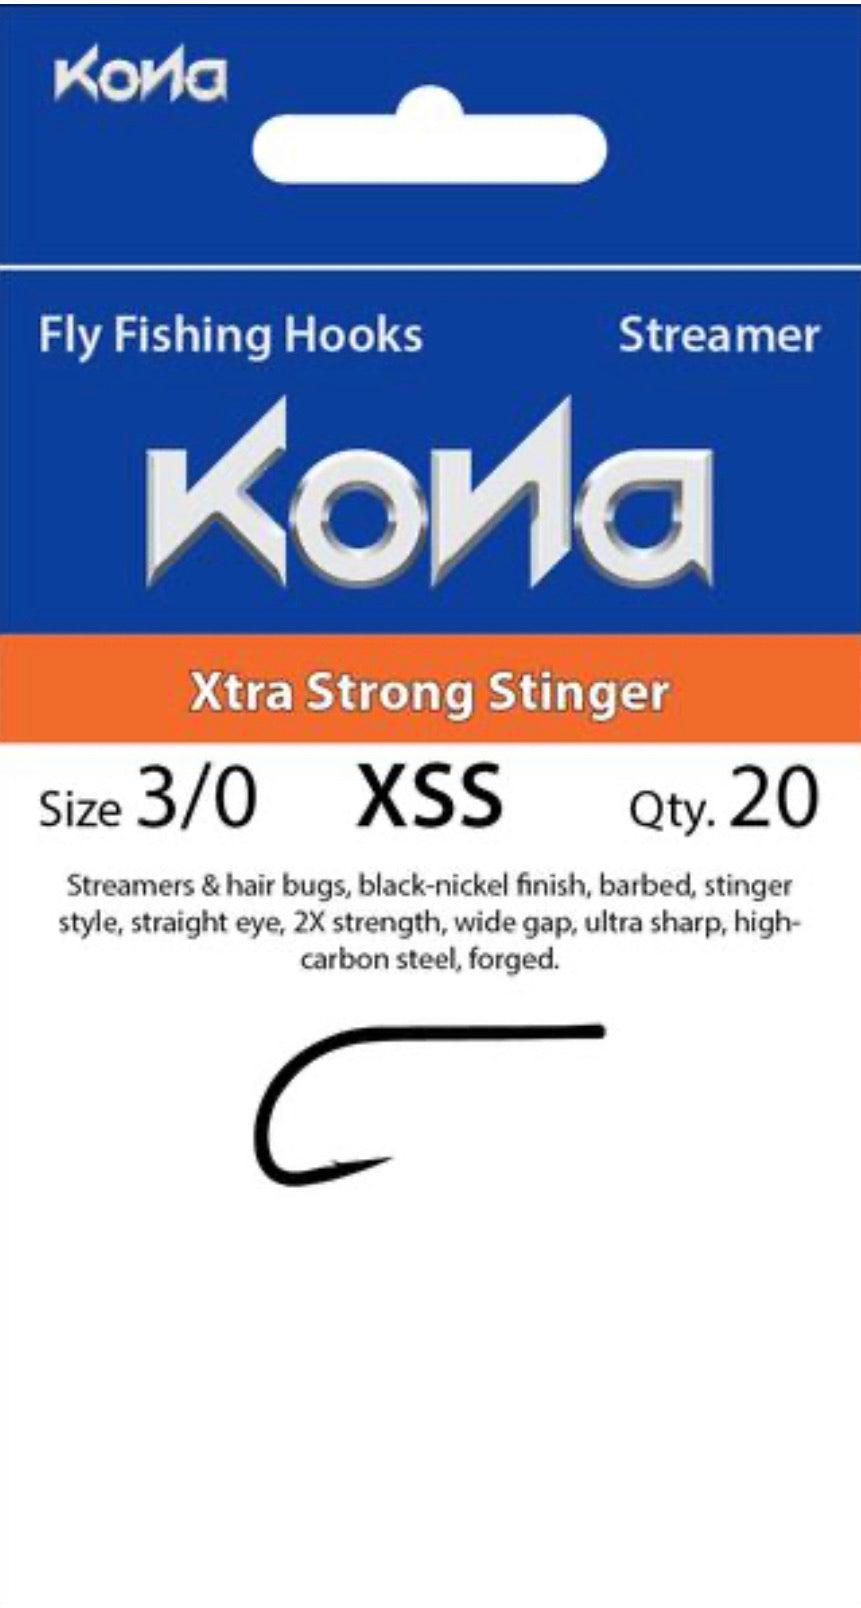 Kona Xtra Strong Stinger (XSS) Hook